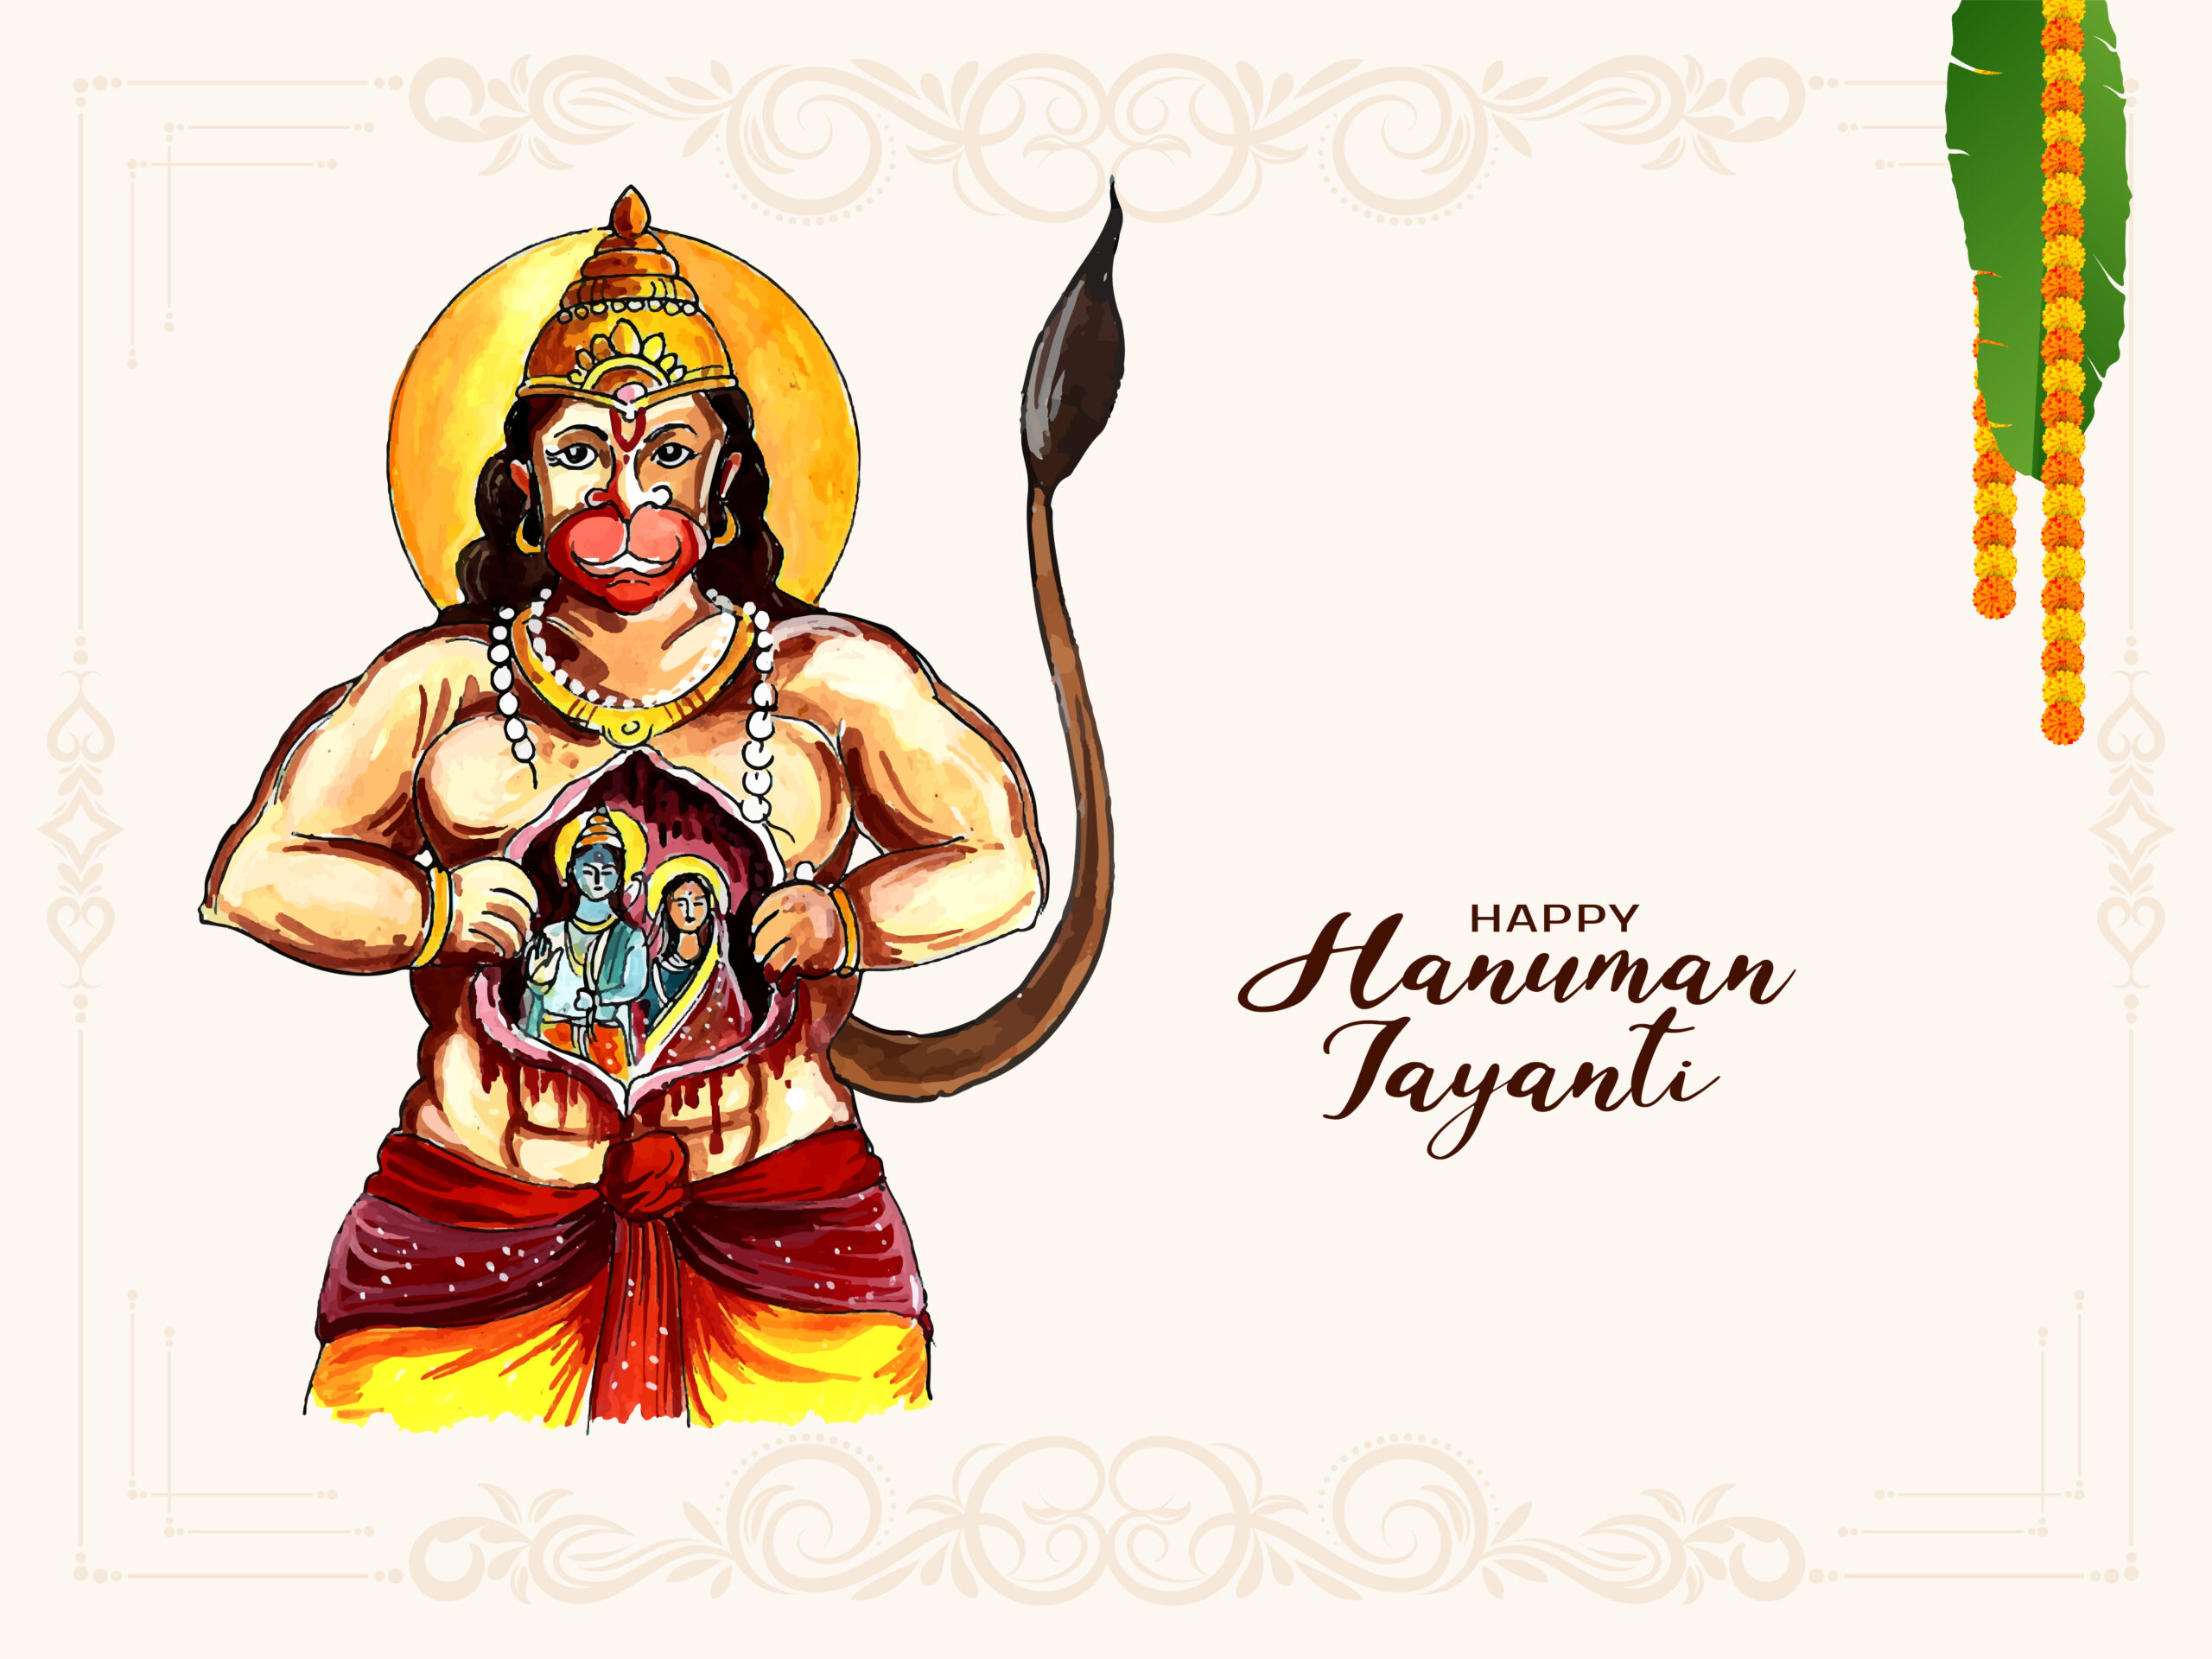 Hanuman Jayanti Indian religious festival